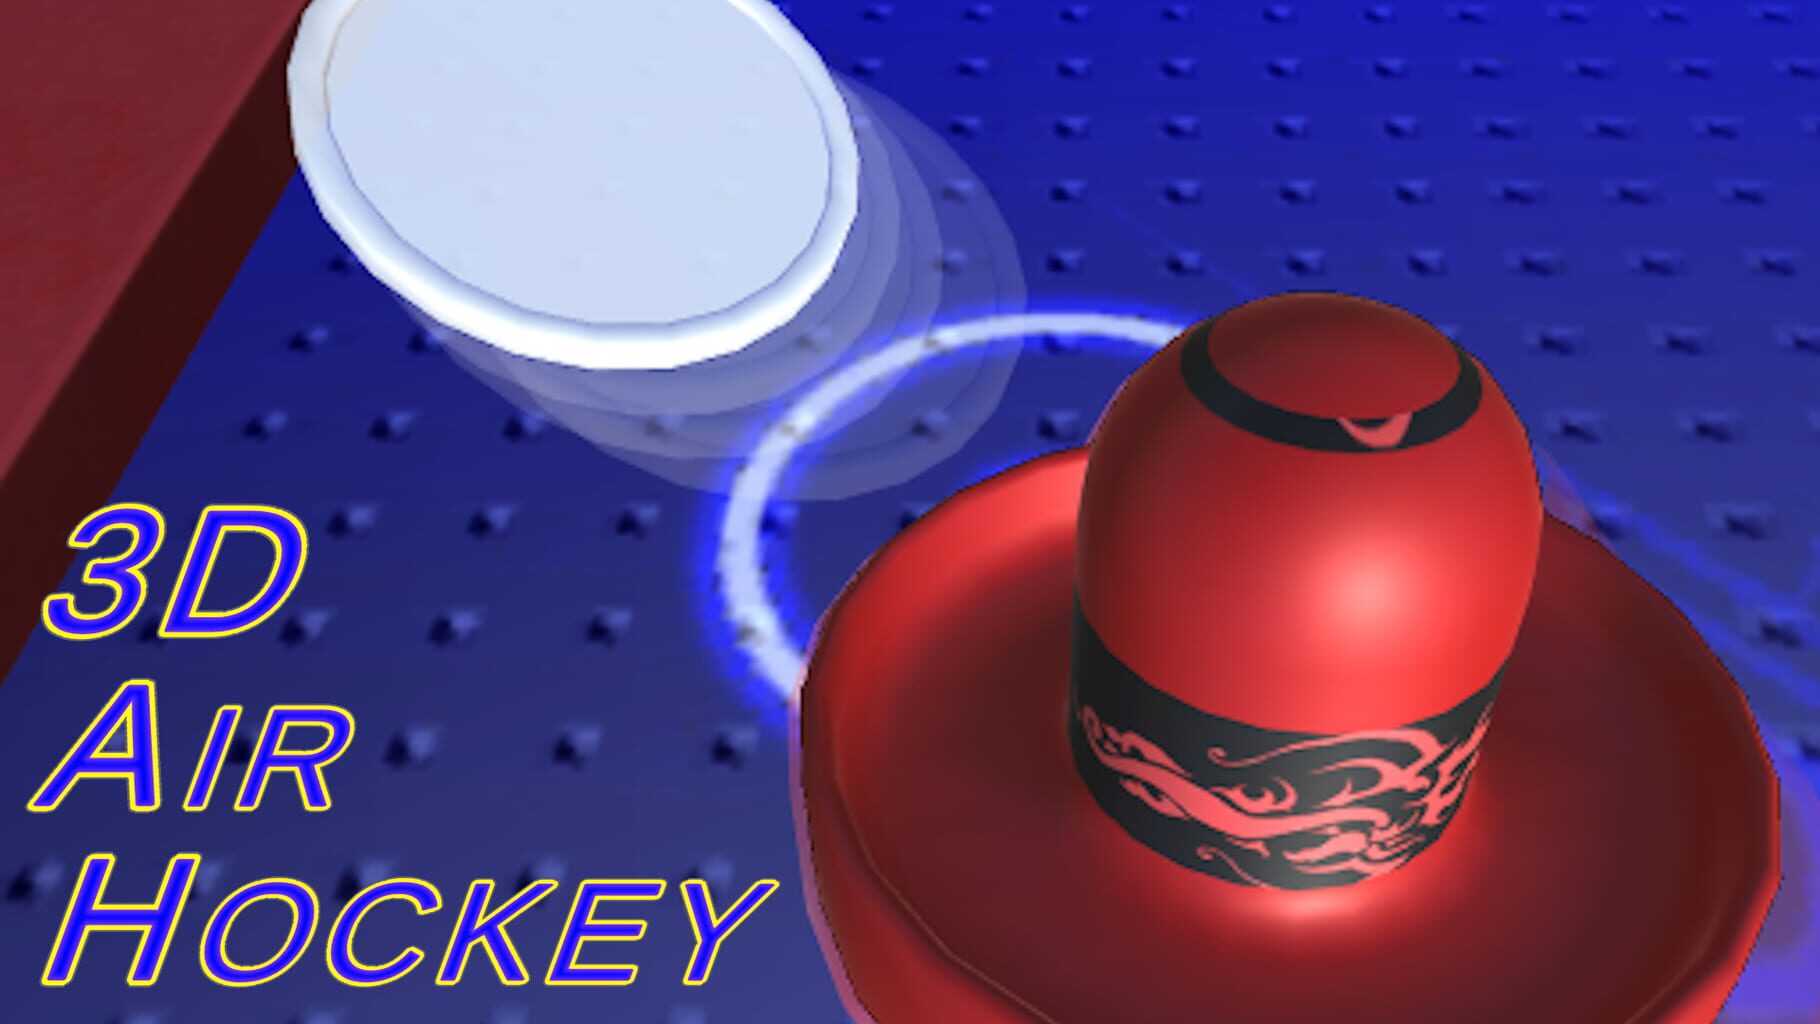 3D Air Hockey artwork